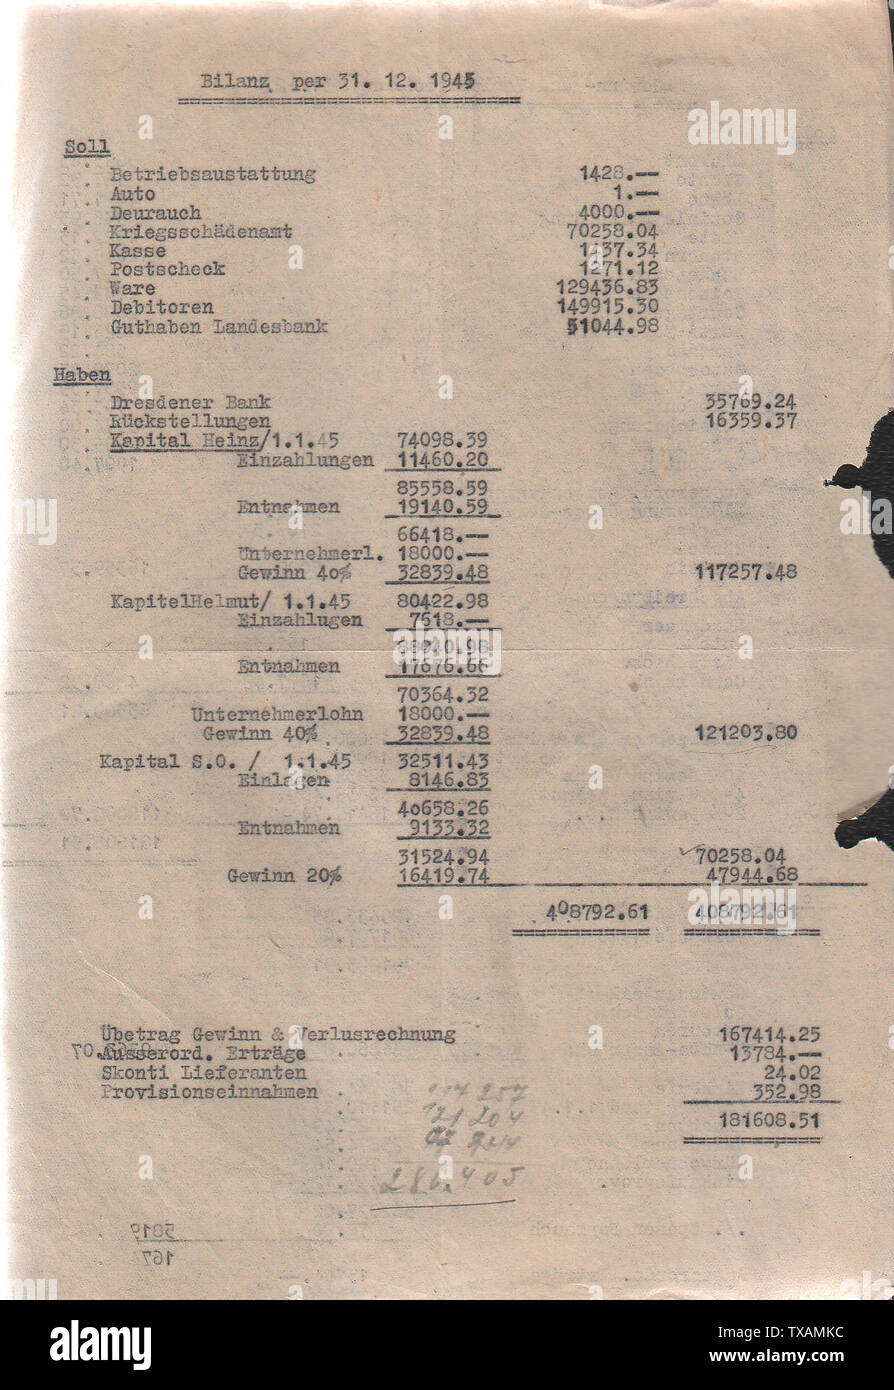 Ohanian Rauchwaren-Kommission, Neuanfang in der Bundesrepublik 1945, GeschÃ¤ftsunterlagen. Bilanz por 31. Dezember 1945.; 31 de diciembre de 1945; Collection G. & C. Franke; Rifra (Talk) 11:00, 26 de marzo de 2016 (UTC); Foto de stock